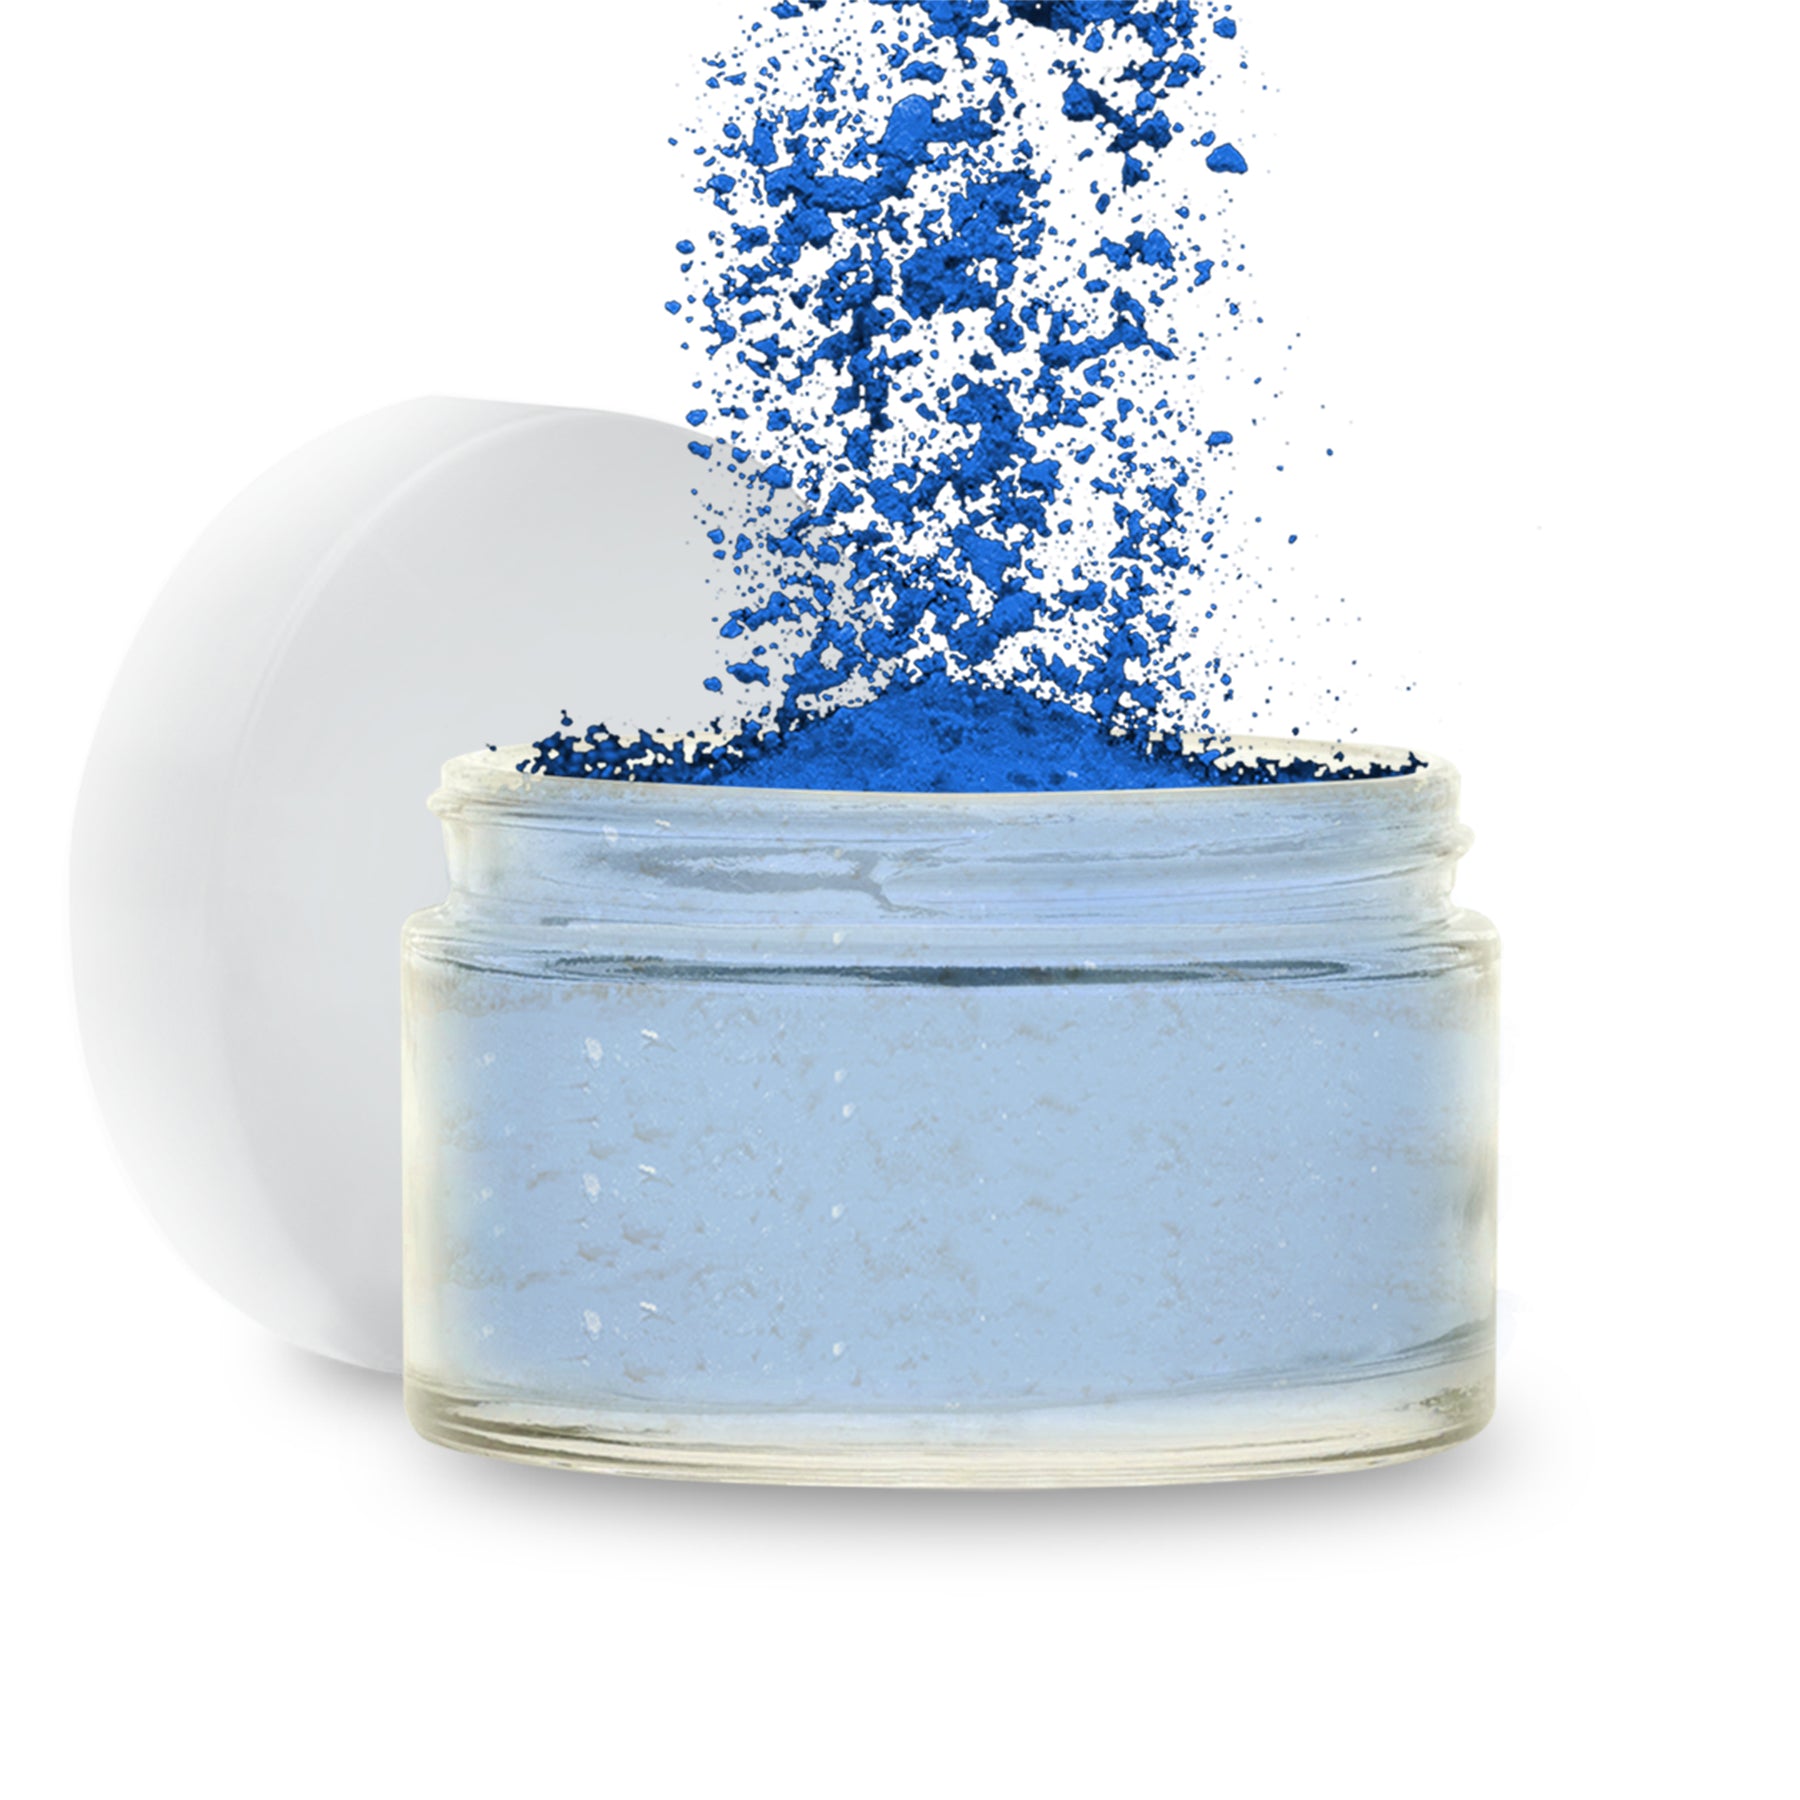 Pearl Pigment Powder, Mica Powder, Primary Blue